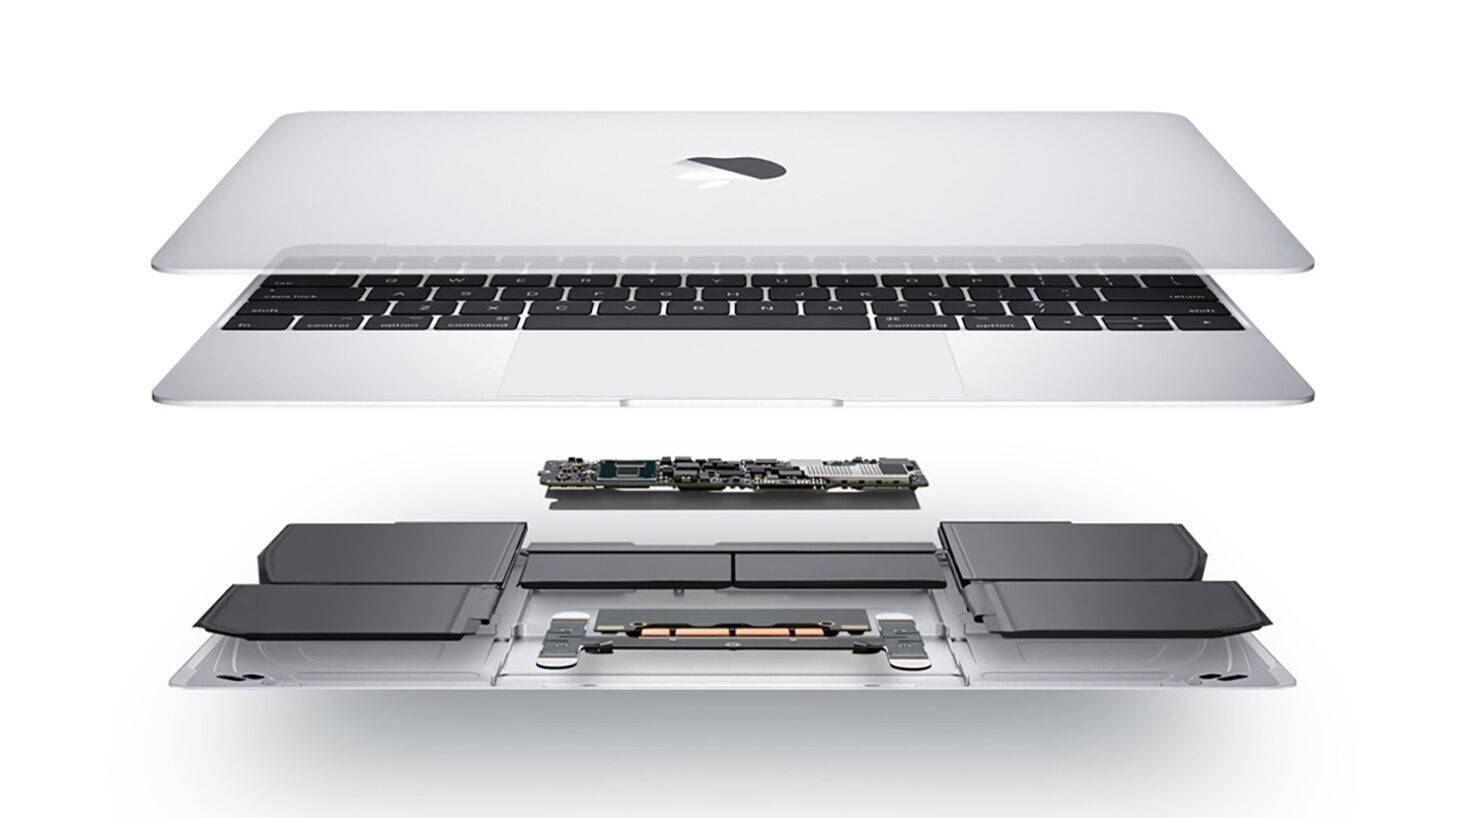 arm işlemcili macbook modelleri, arm işlemcili macbook, 12 inç macbook, yeni macbook modelleri, a14x bionic işlemci